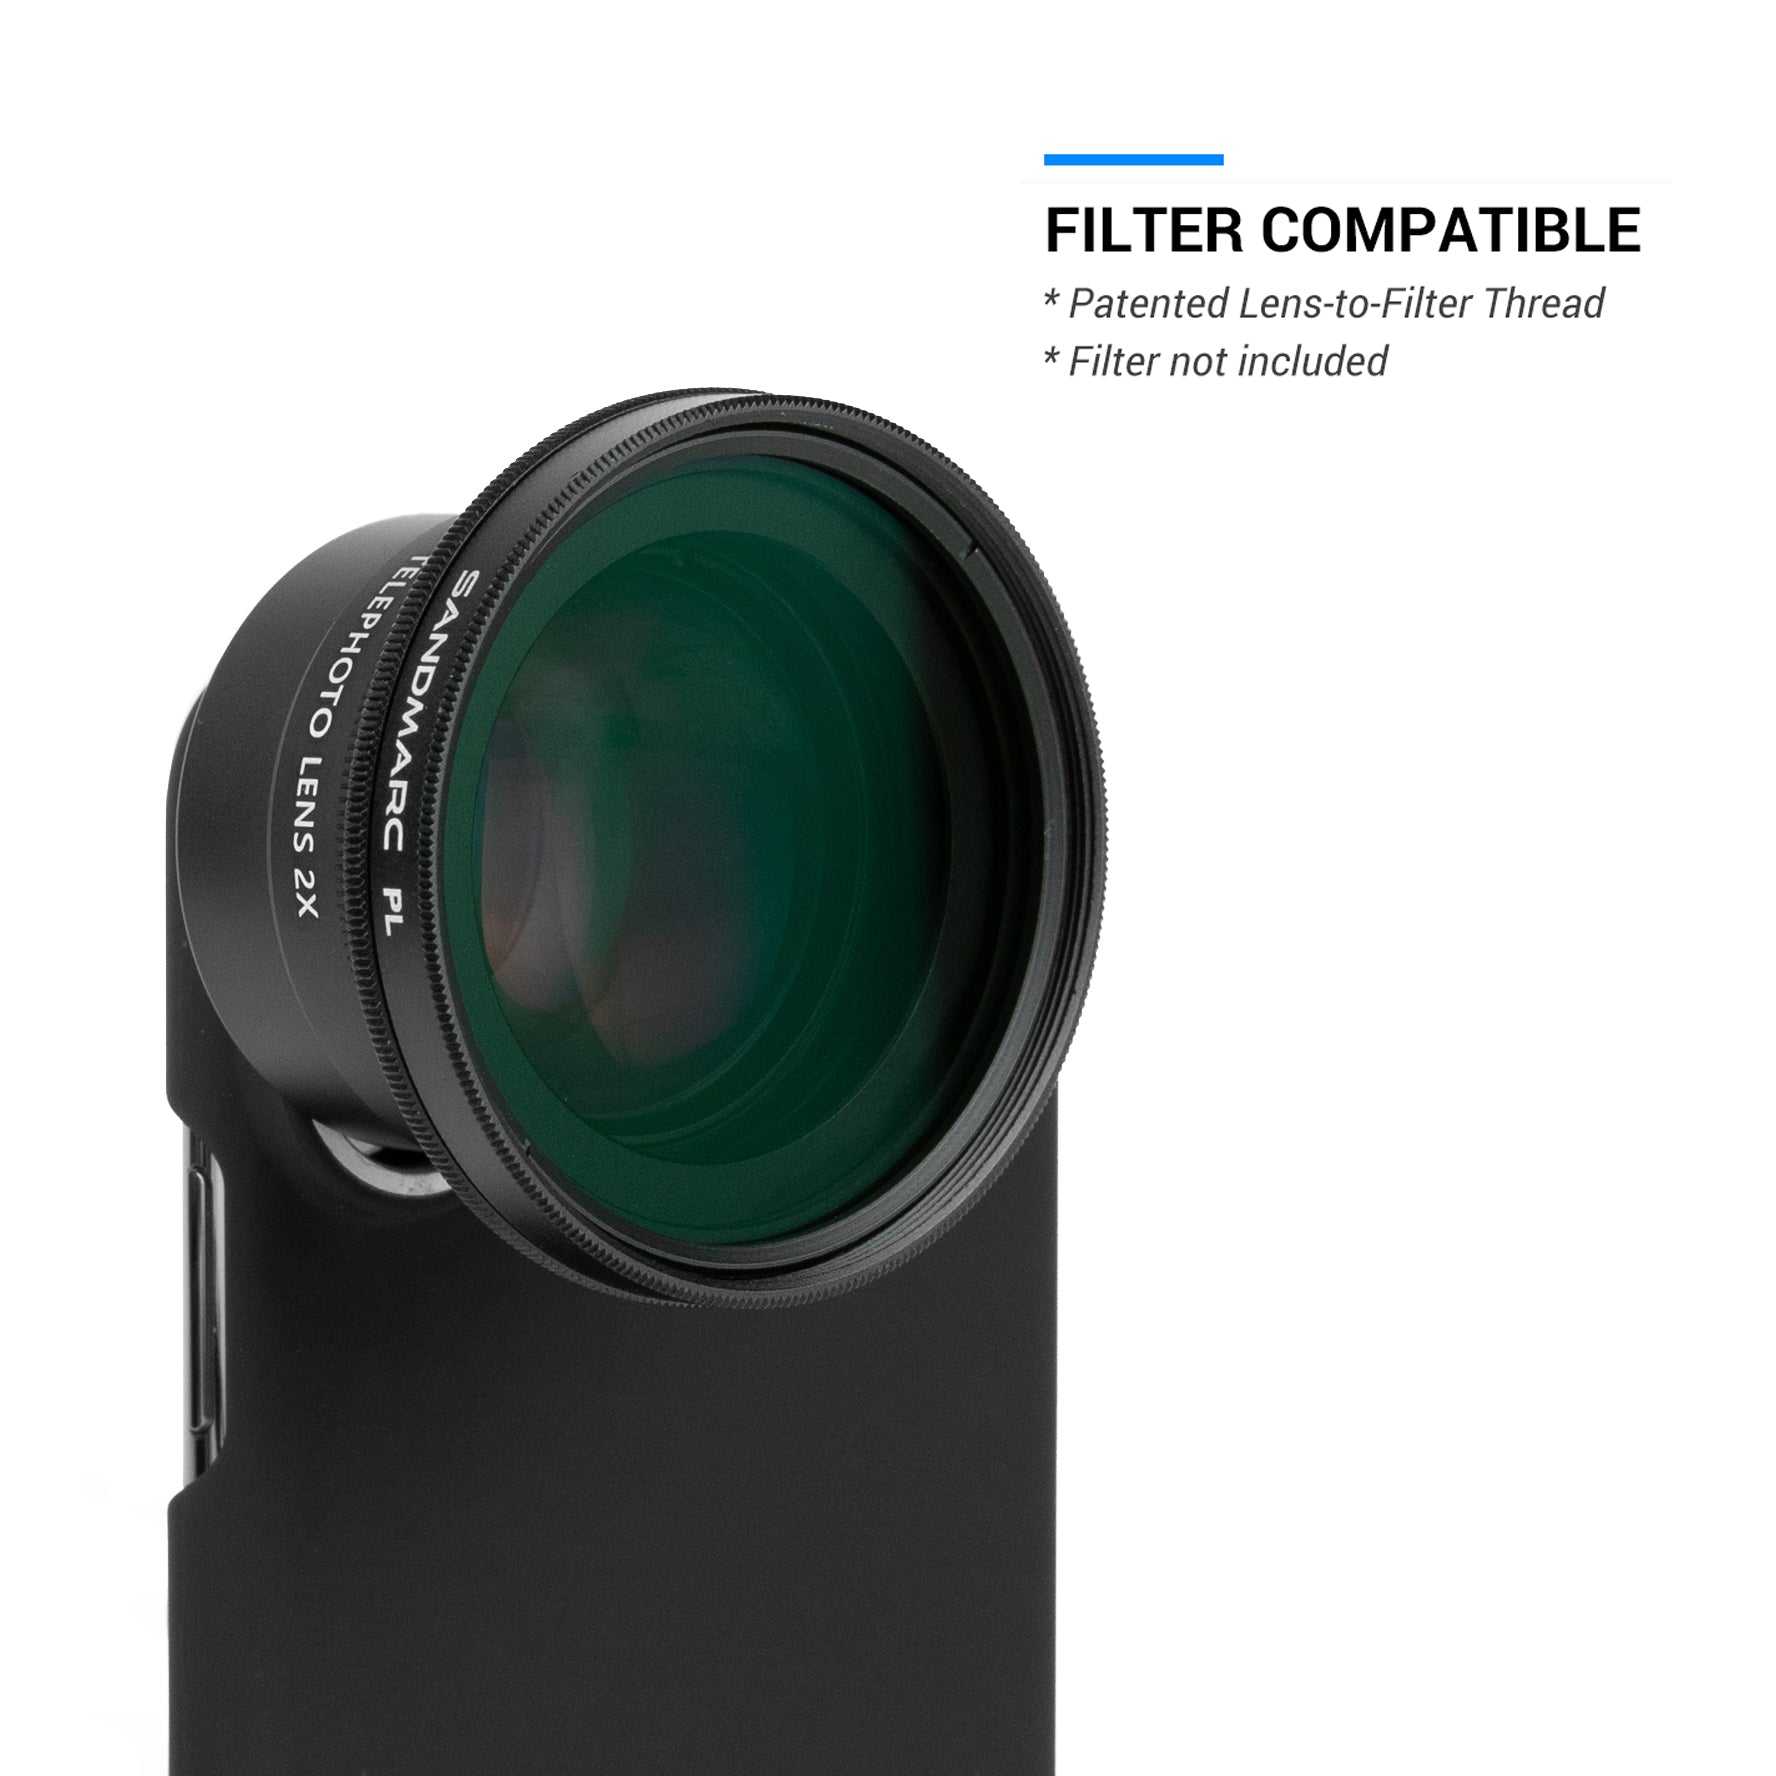 Telephoto Lens Edition - iPhone 13 Mini - SANDMARC